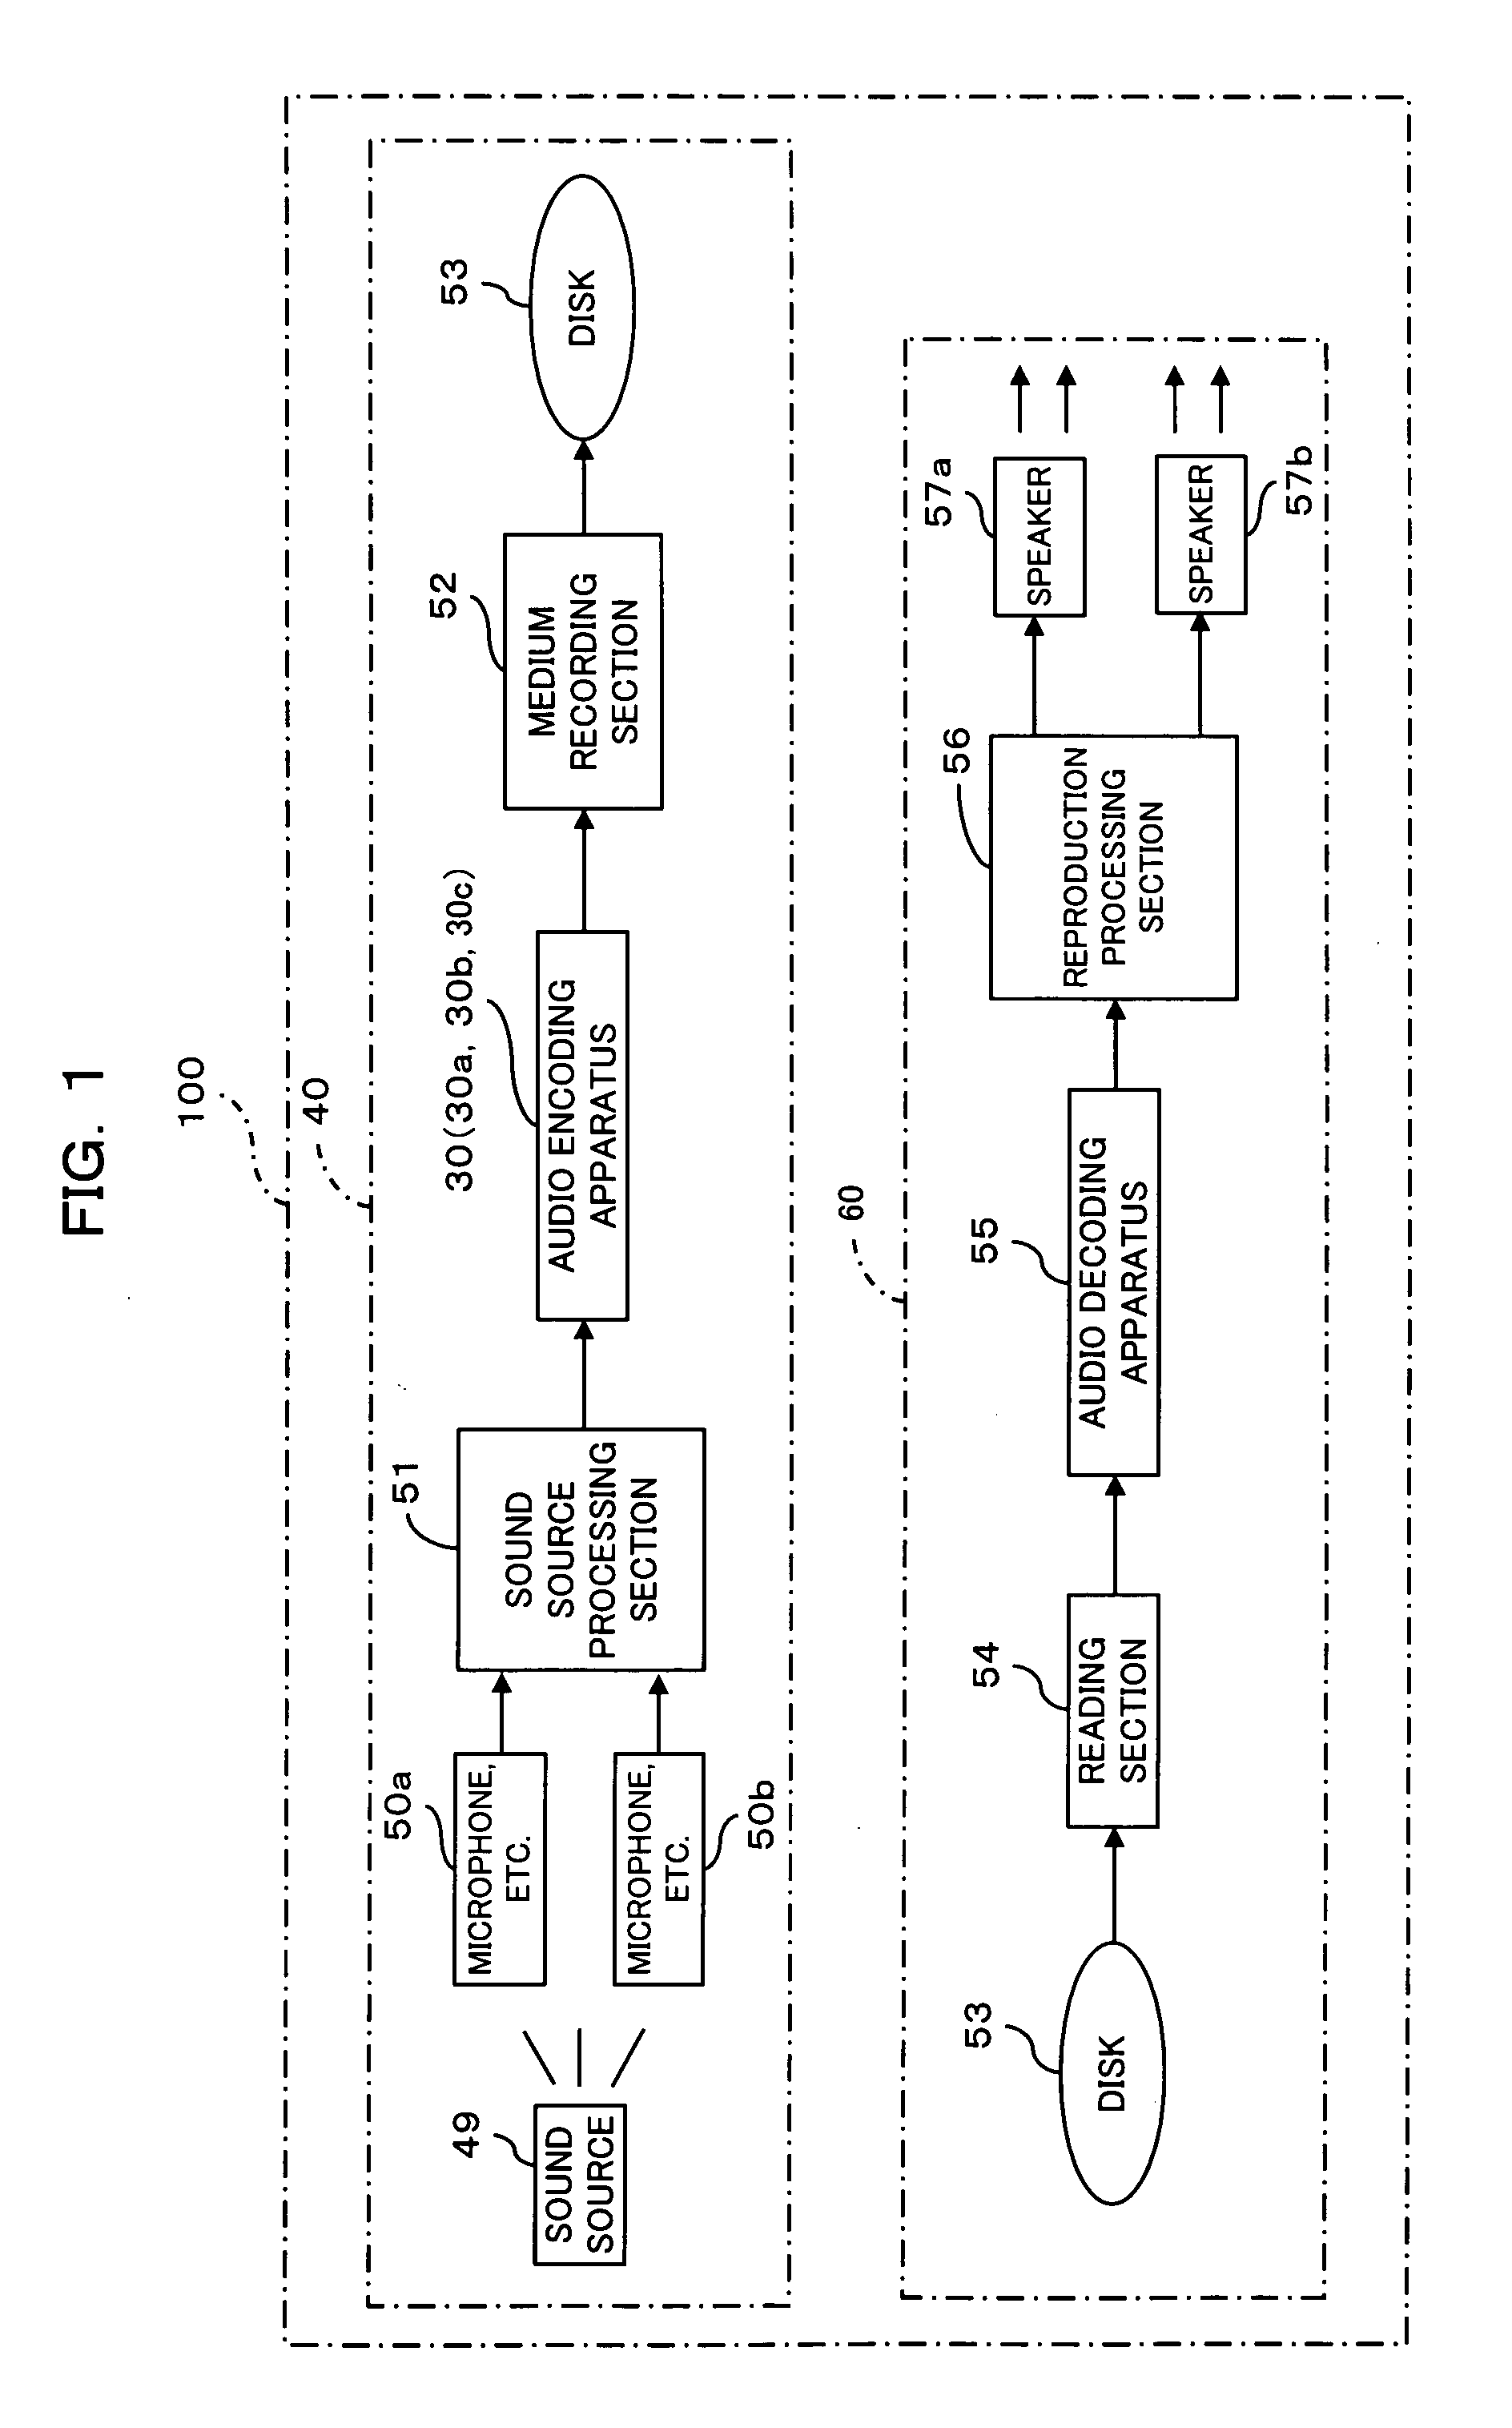 Audio encoding apparatus and frame region allocation circuit for audio encoding apparatus